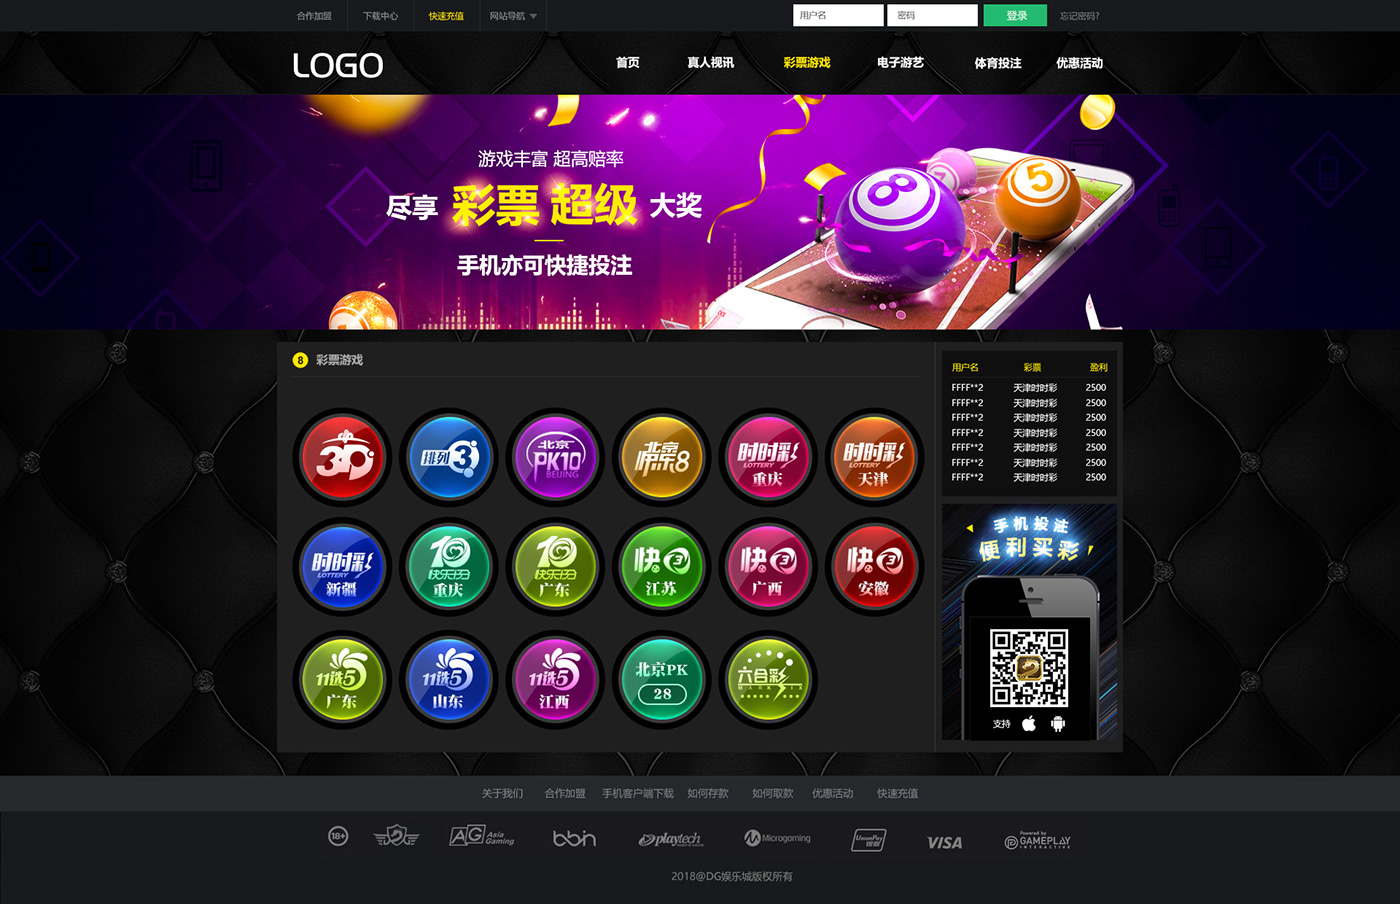 web casino